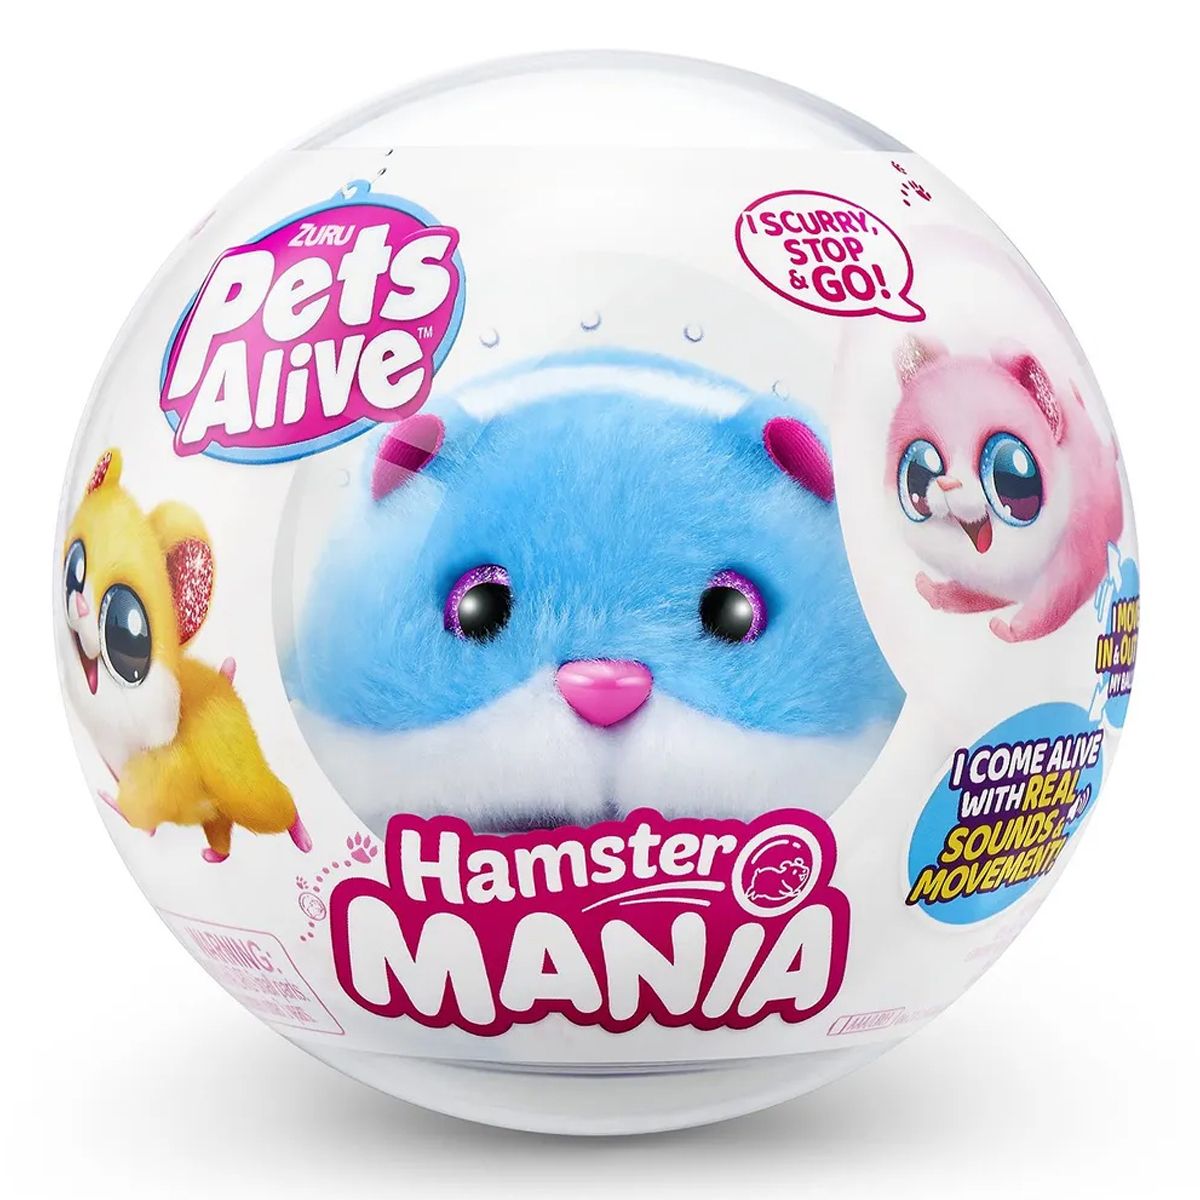 Игрушка zuru pets. Zuru Pets Alive. Hamster Mania игрушка. Hamster Mania Toy игрушка. Zuru Pets собака в шаре.